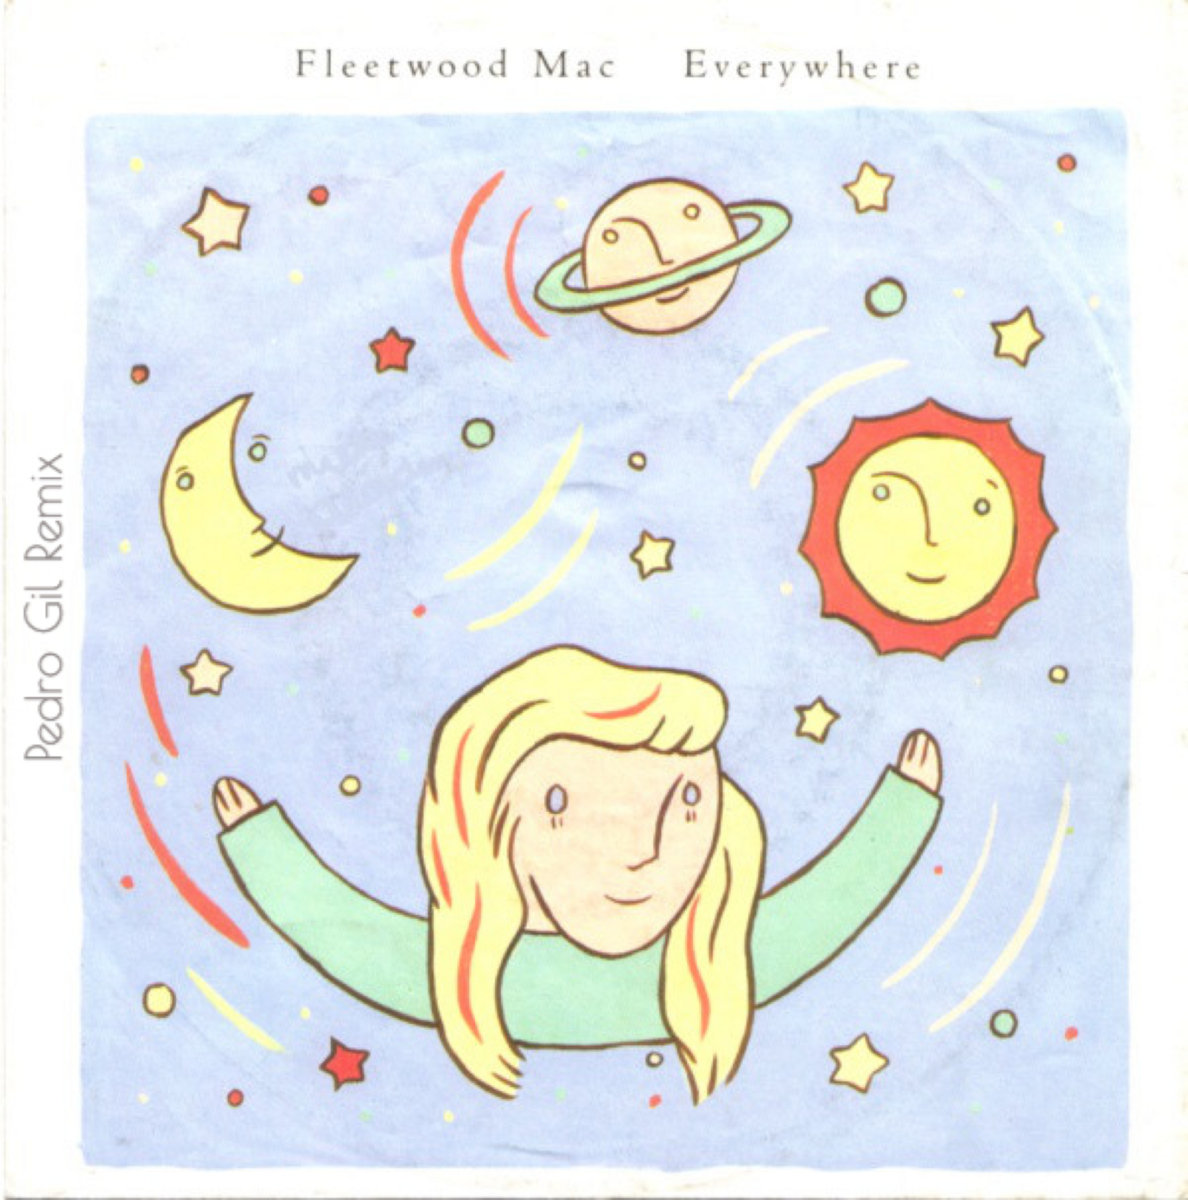 Fleetwood mac everywhere remix mp3 download free music